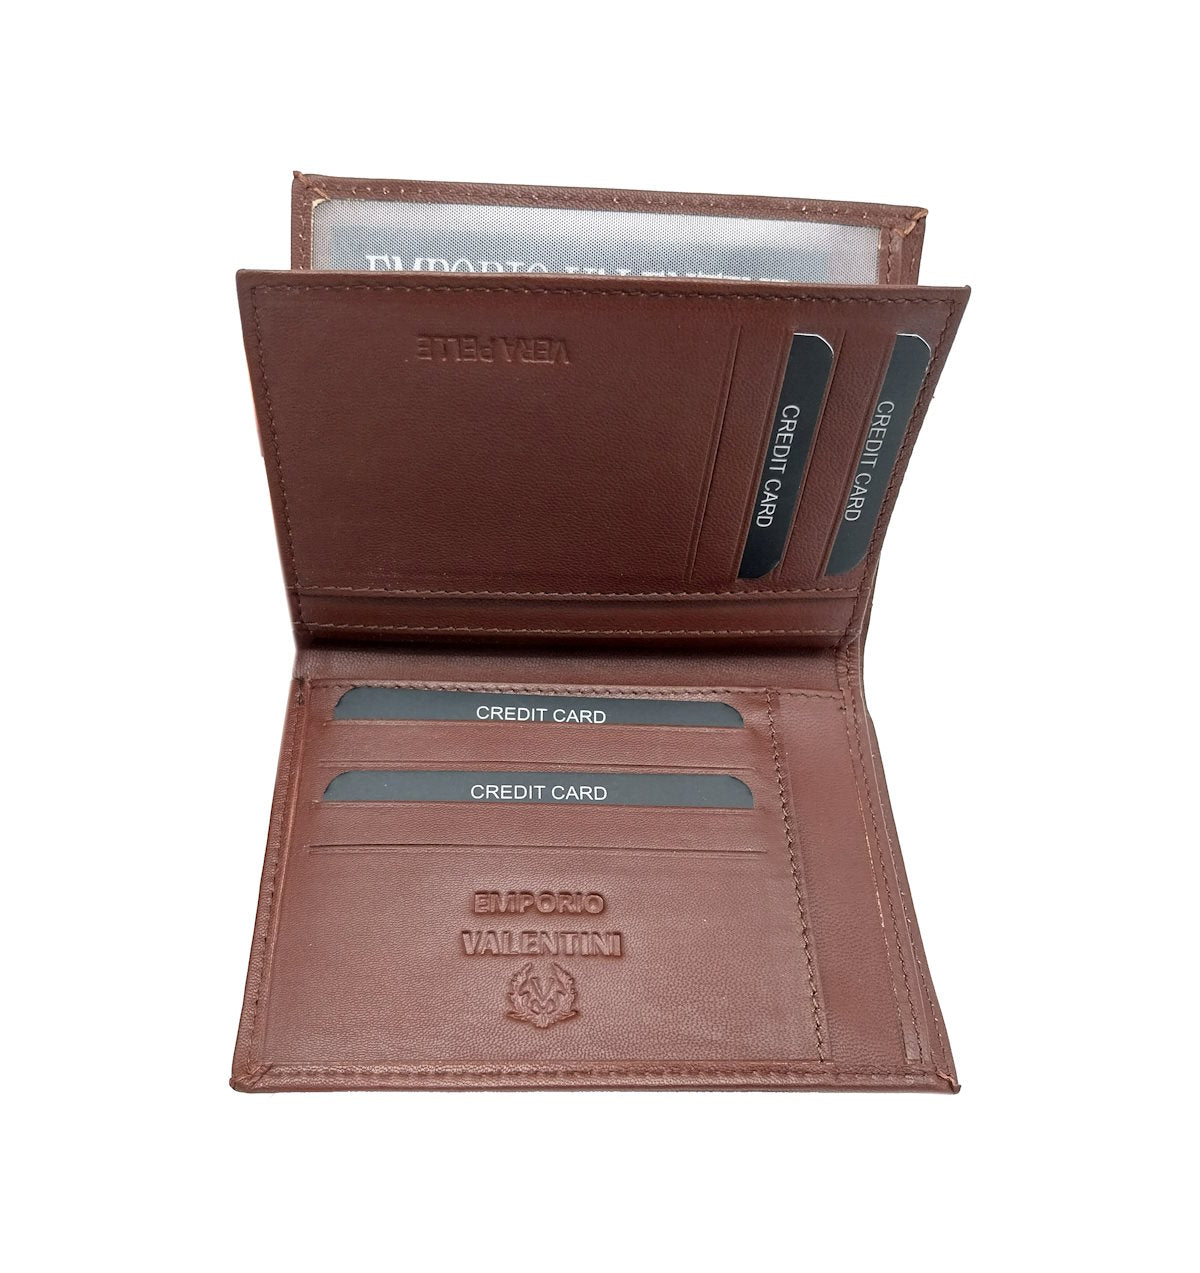 Genuine leather wallet, Emporio Valentini, for men, art. 7465